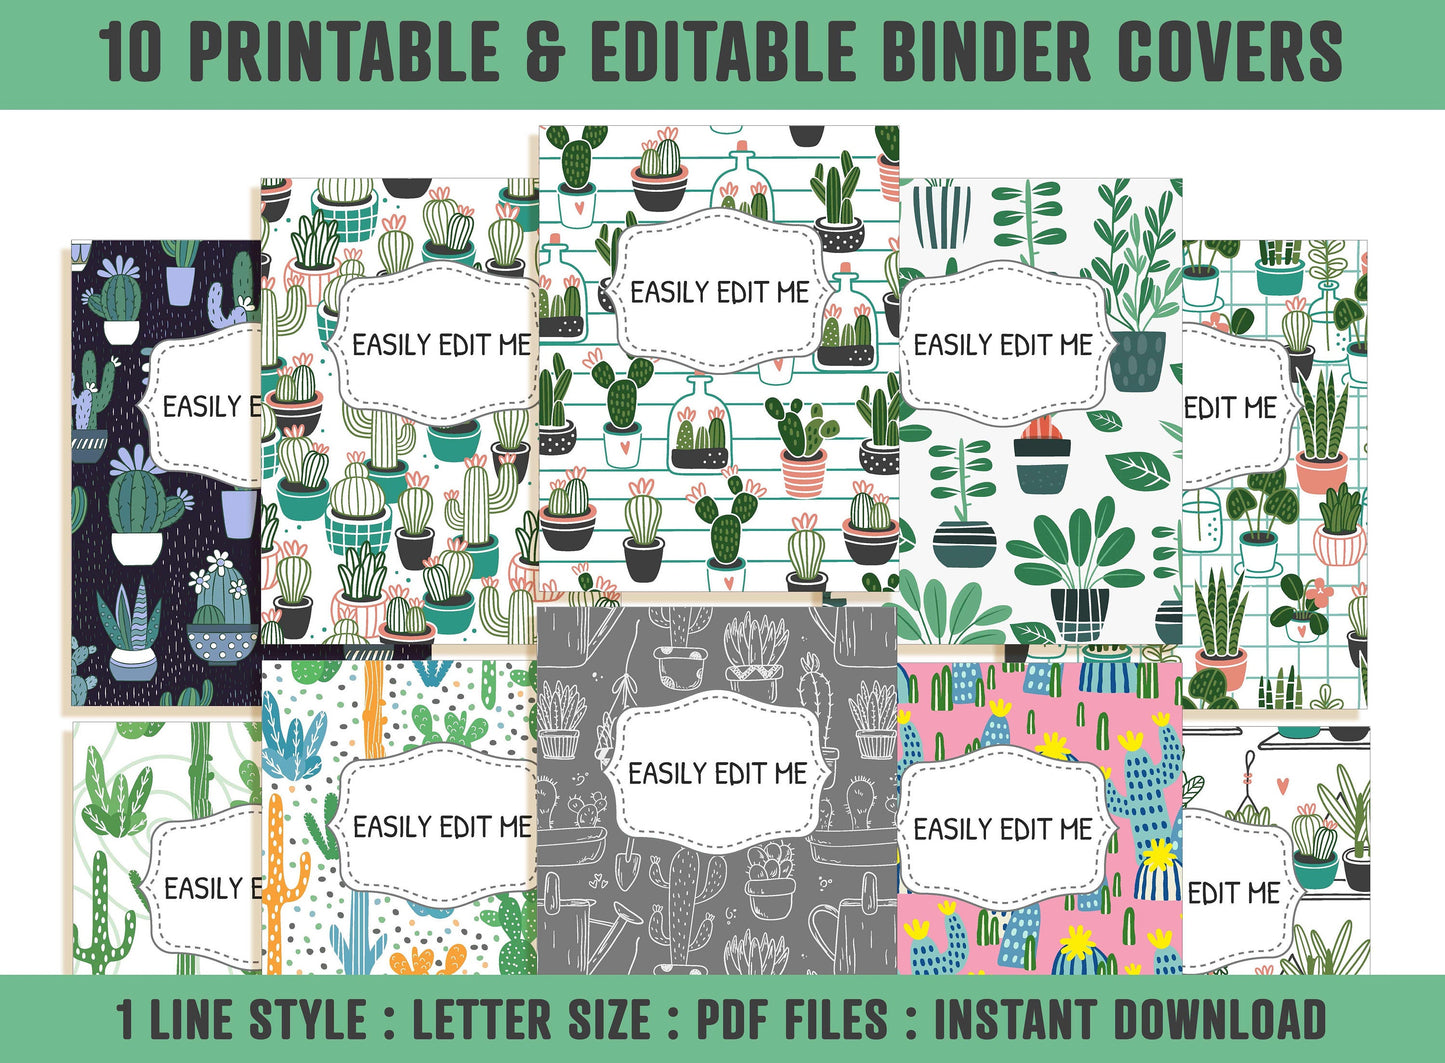 Cactus Binder Cover, 10 Printable/Editable Covers+Spines, Binder Insert, Planner Cover, Teacher/School Binder Cover, Printable Binder Cover